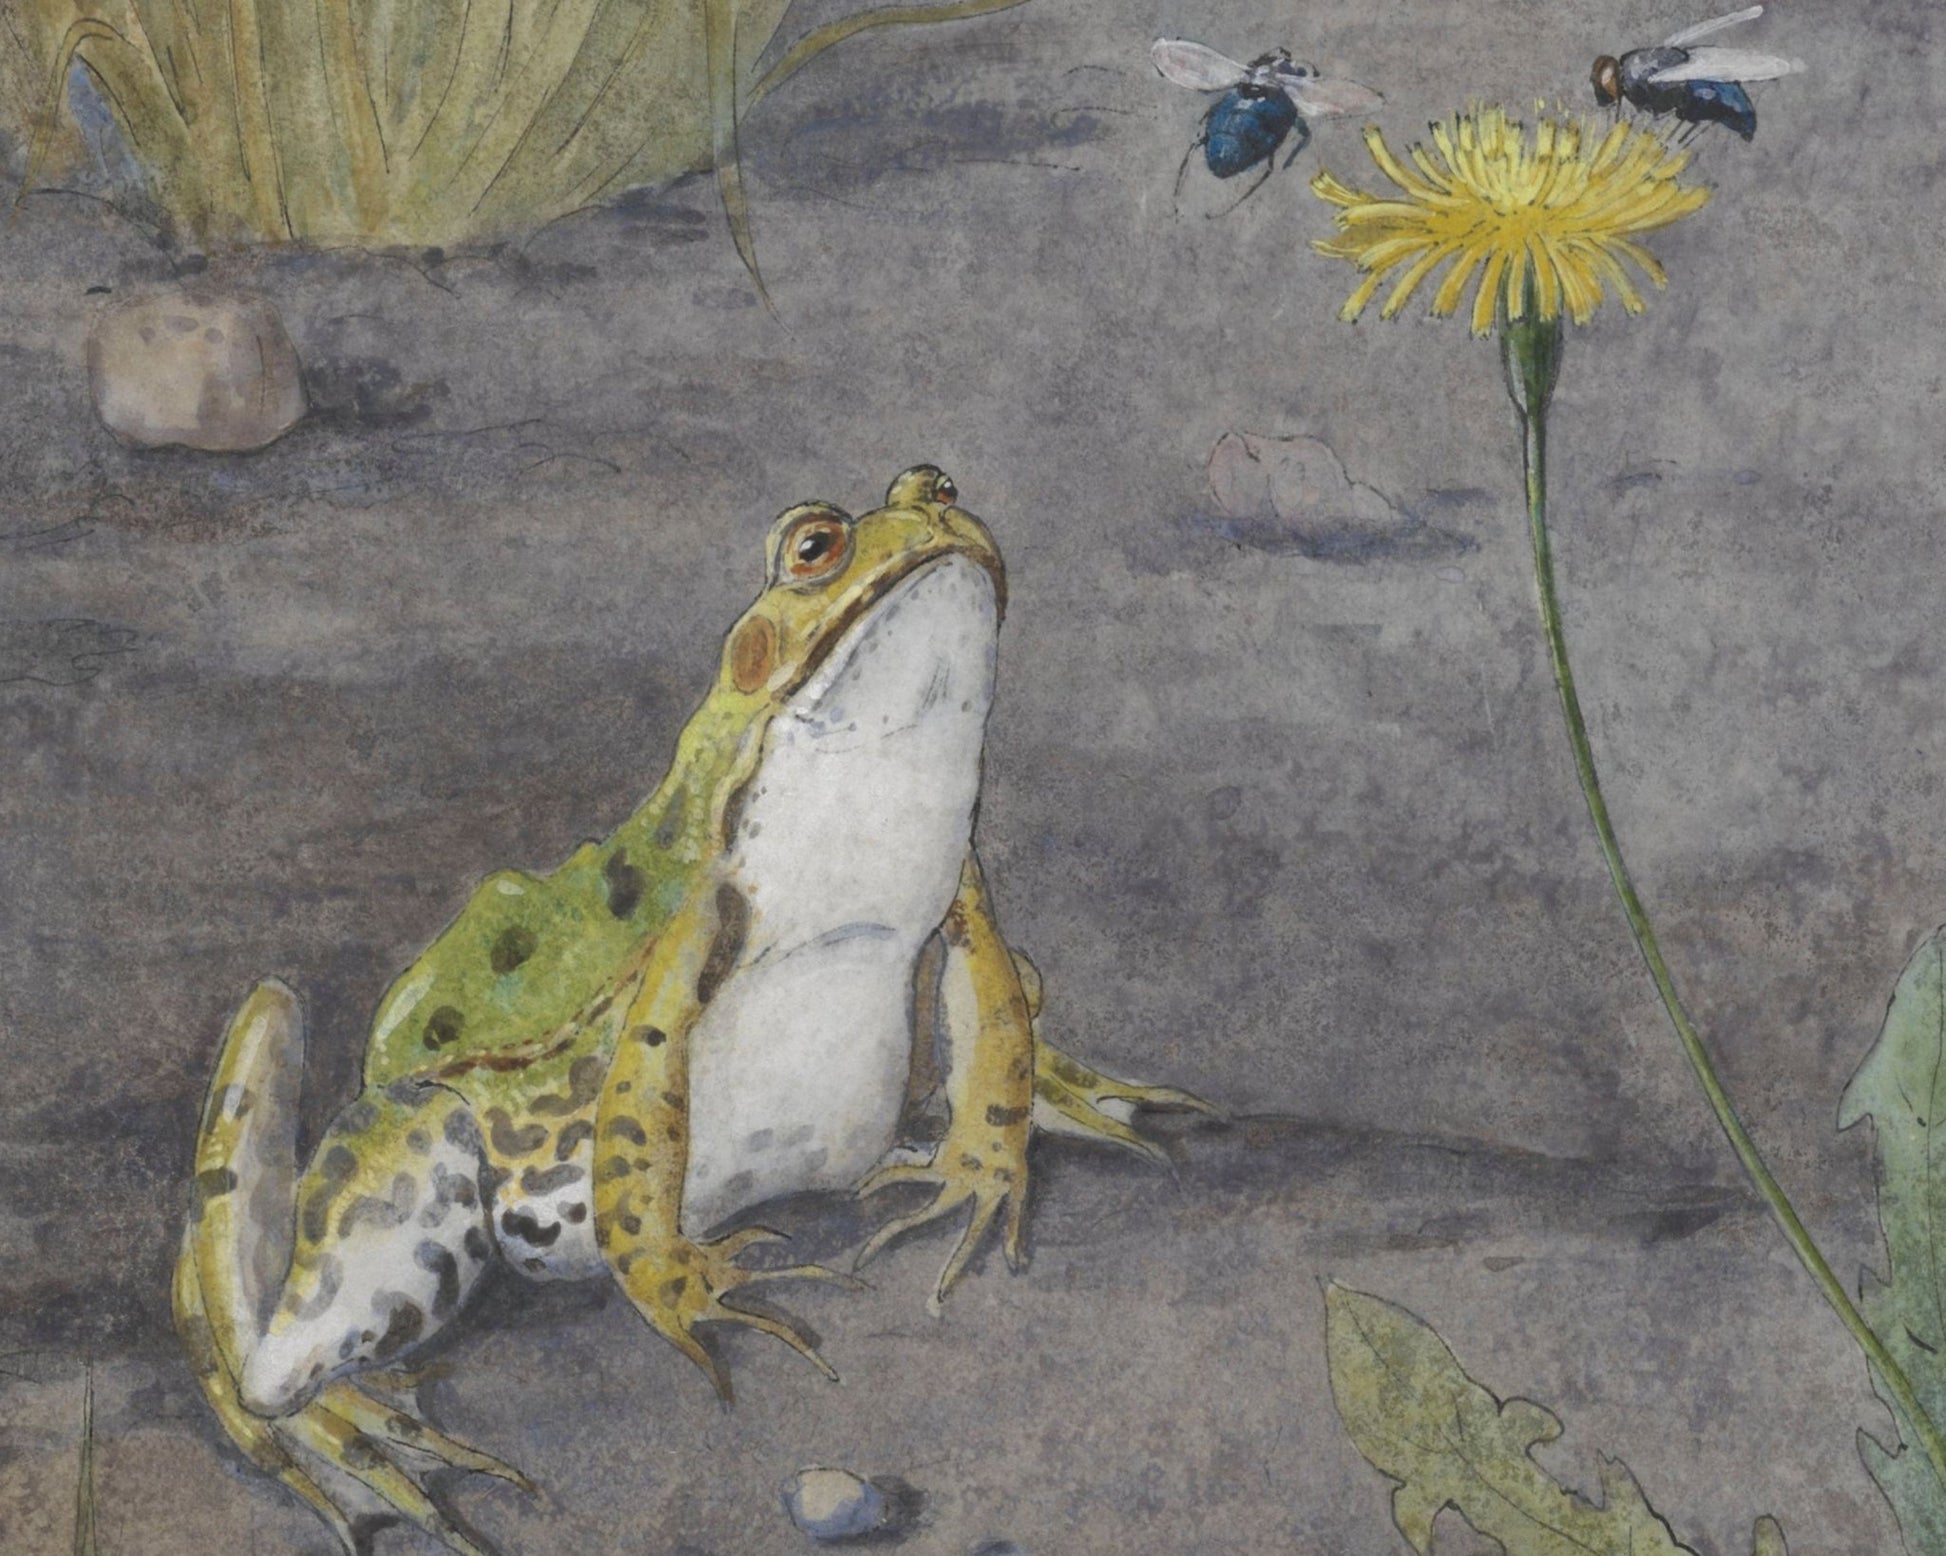 Jan van Oort "Frog with a Dandelion with Flies" (c.1877 - c.1938) - Mabon Gallery